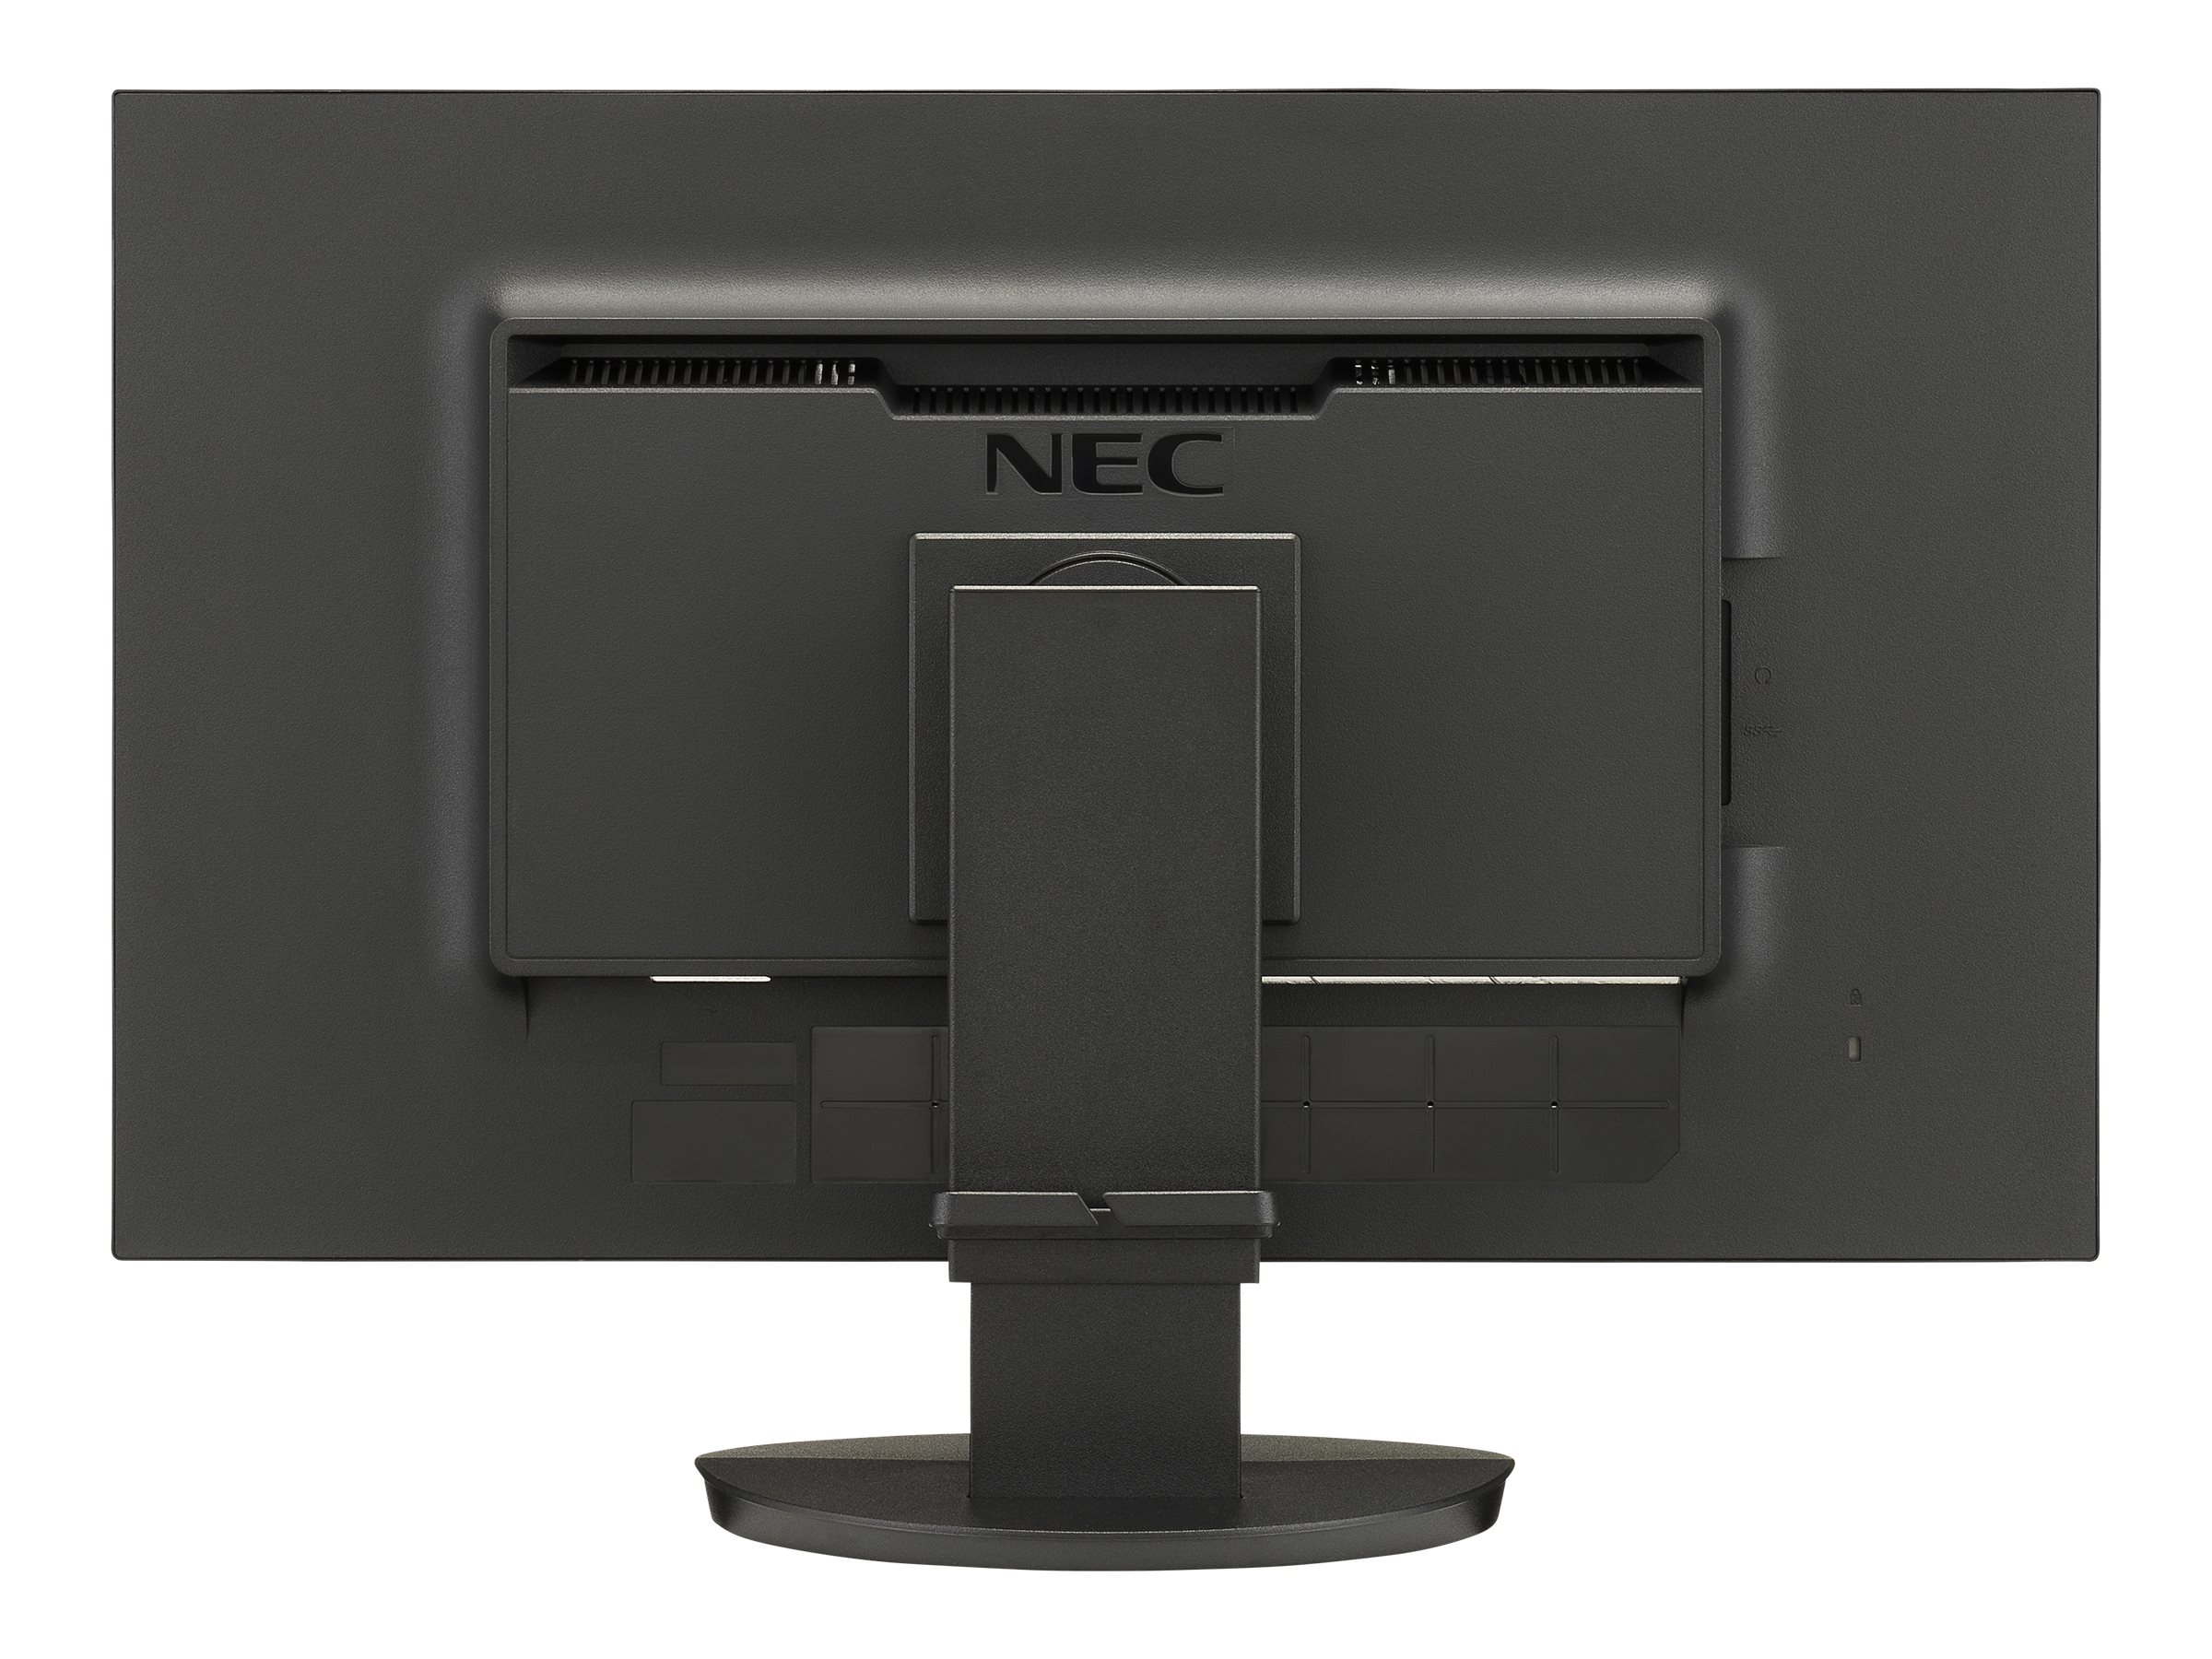 NEC MultiSync EA271F - Commercial - écran LED - 27" - 1920 x 1080 Full HD (1080p) @ 60 Hz - AH-IPS - 250 cd/m² - 1000:1 - 6 ms - HDMI, DVI-D, VGA, DisplayPort - haut-parleurs - noir - 60004304 - Écrans d'ordinateur